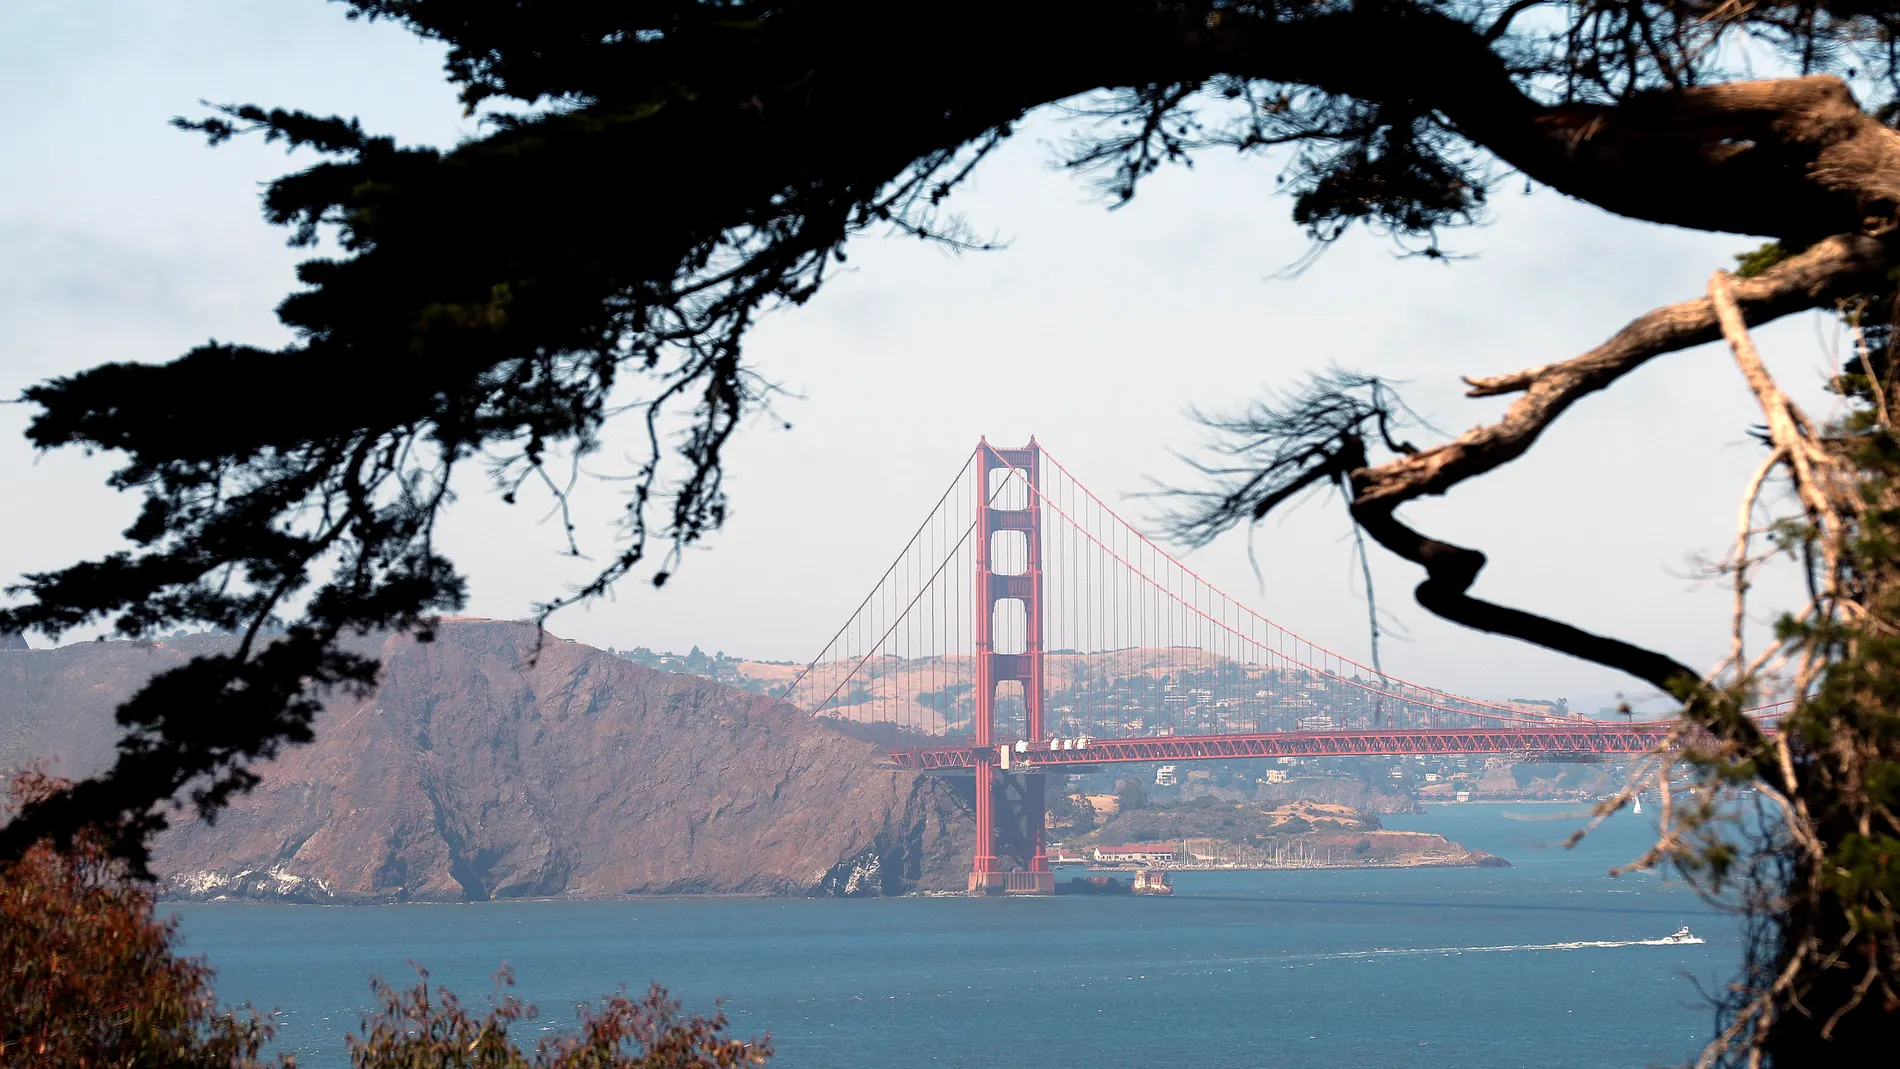 San Francisco's iconic Golden Gate Bridge turns 83